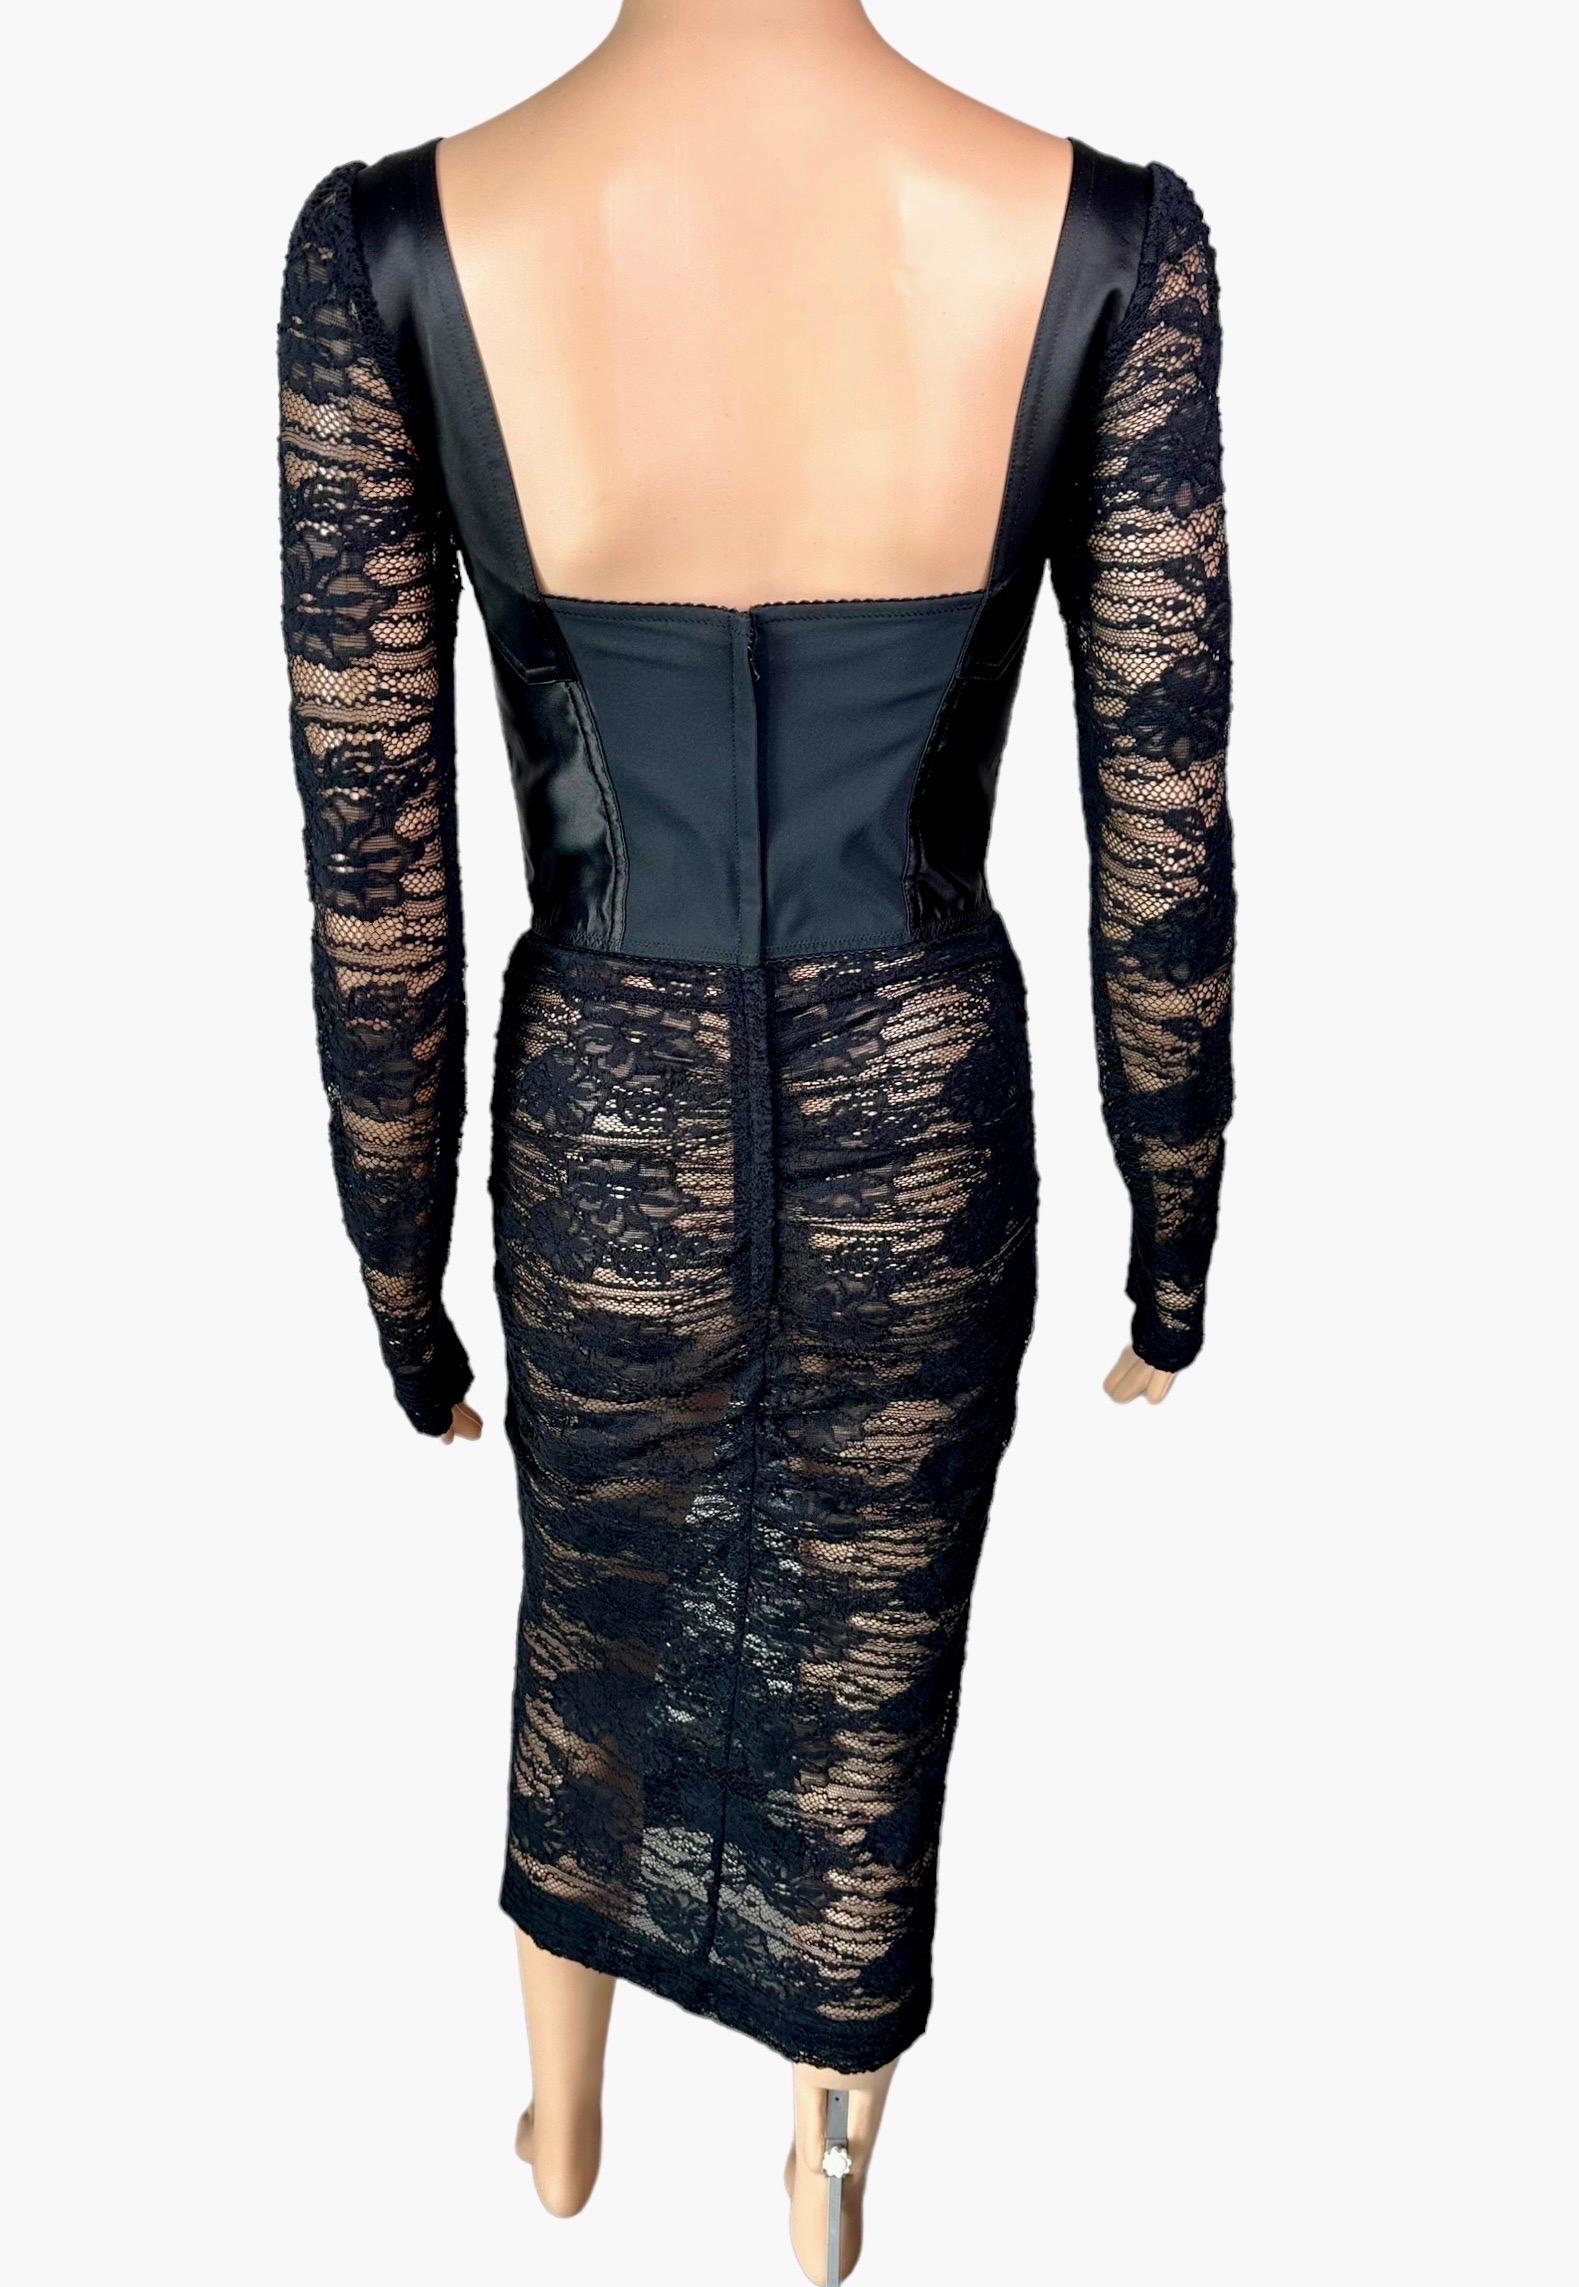 Dolce & Gabbana Bustier Corset Bra Sheer Lace Crochet Bodycon Black Midi Dress For Sale 4